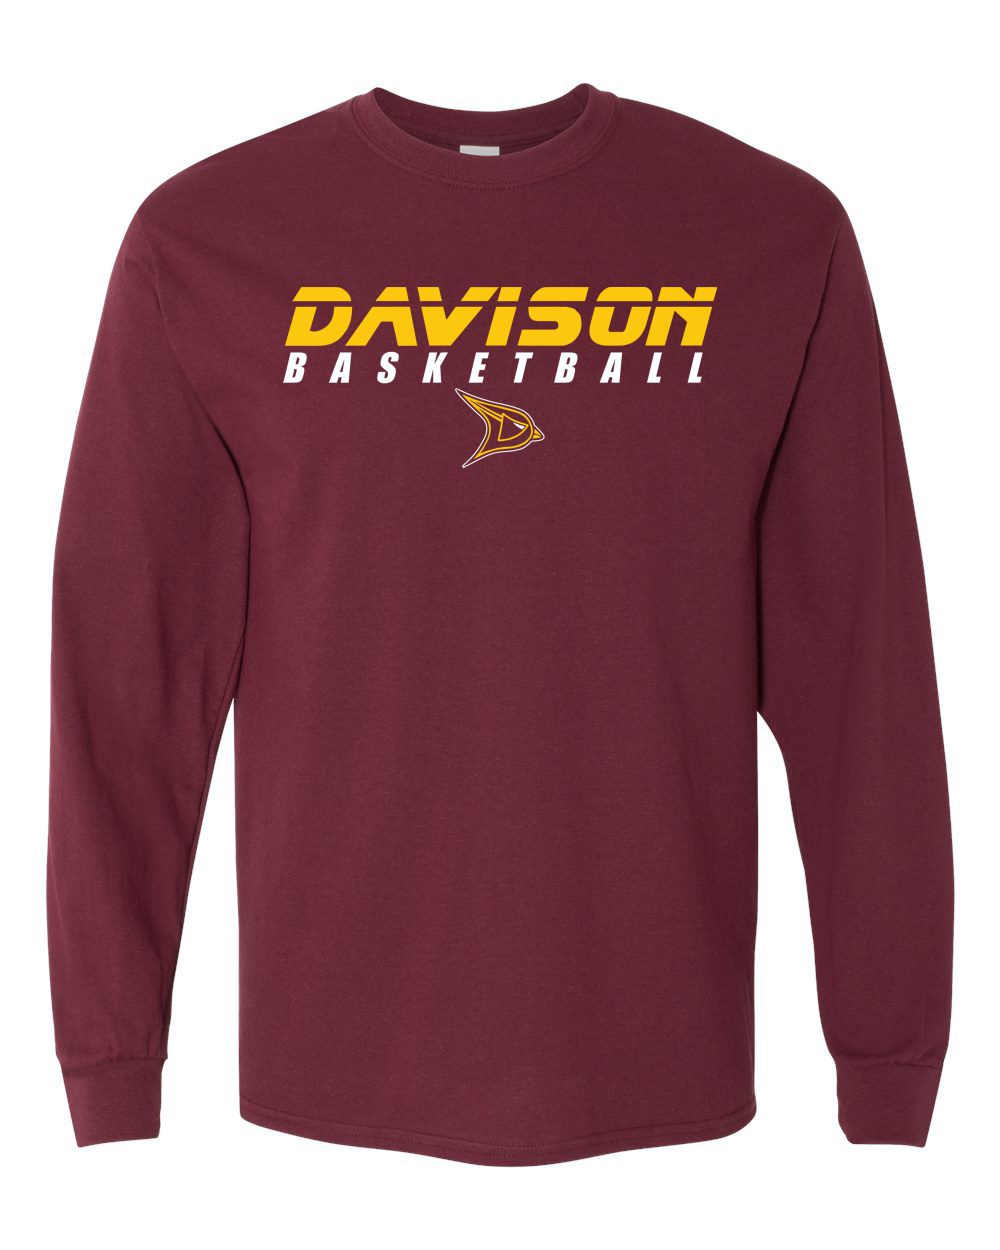 Davison Basketball Long Sleeve Shirt